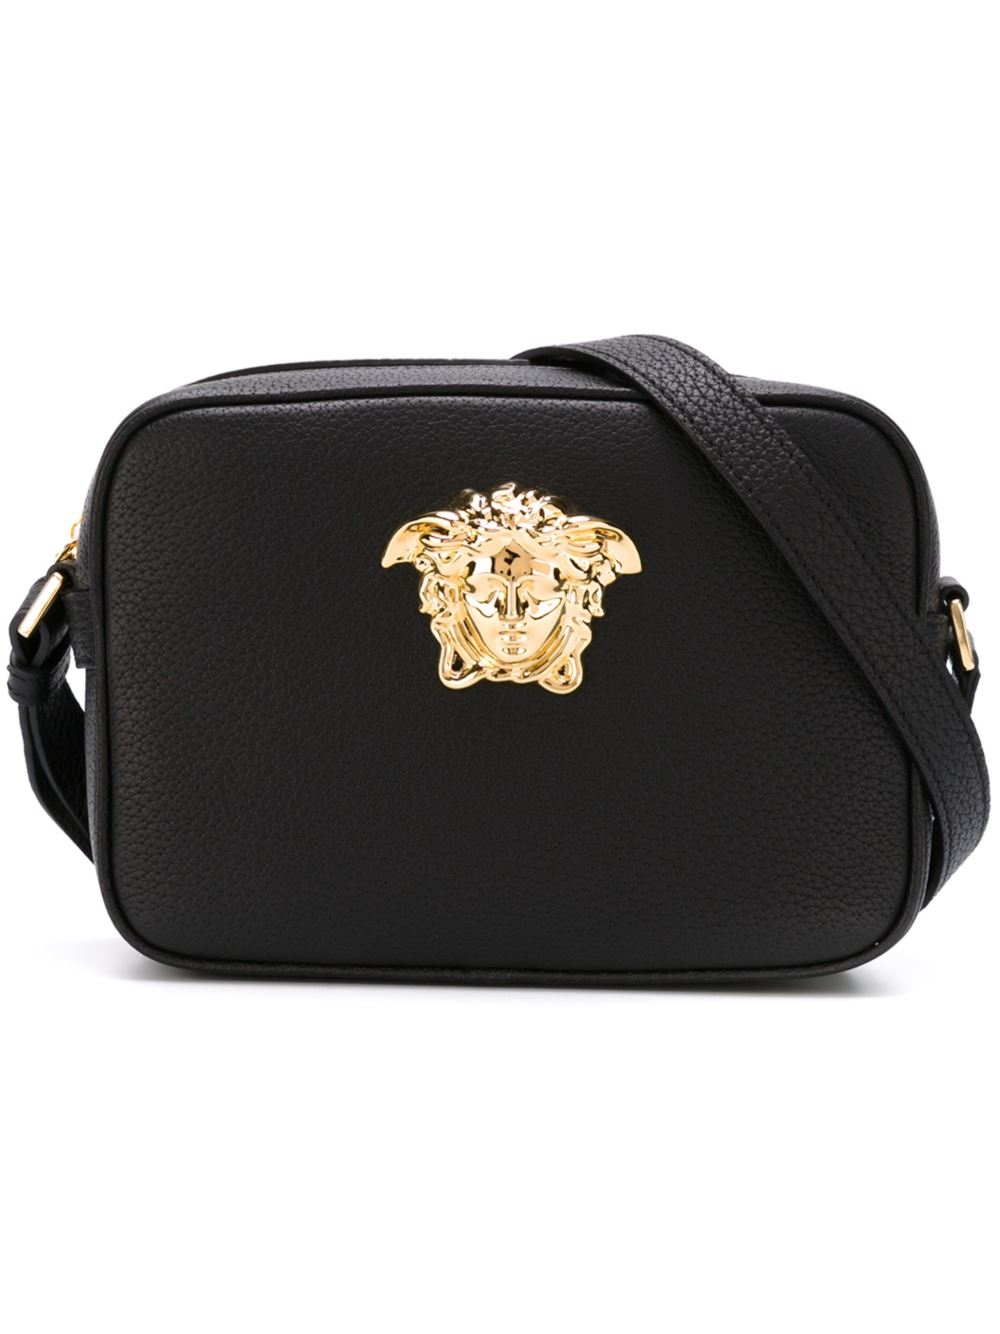 Versace Men's Handbags | Paul Smith